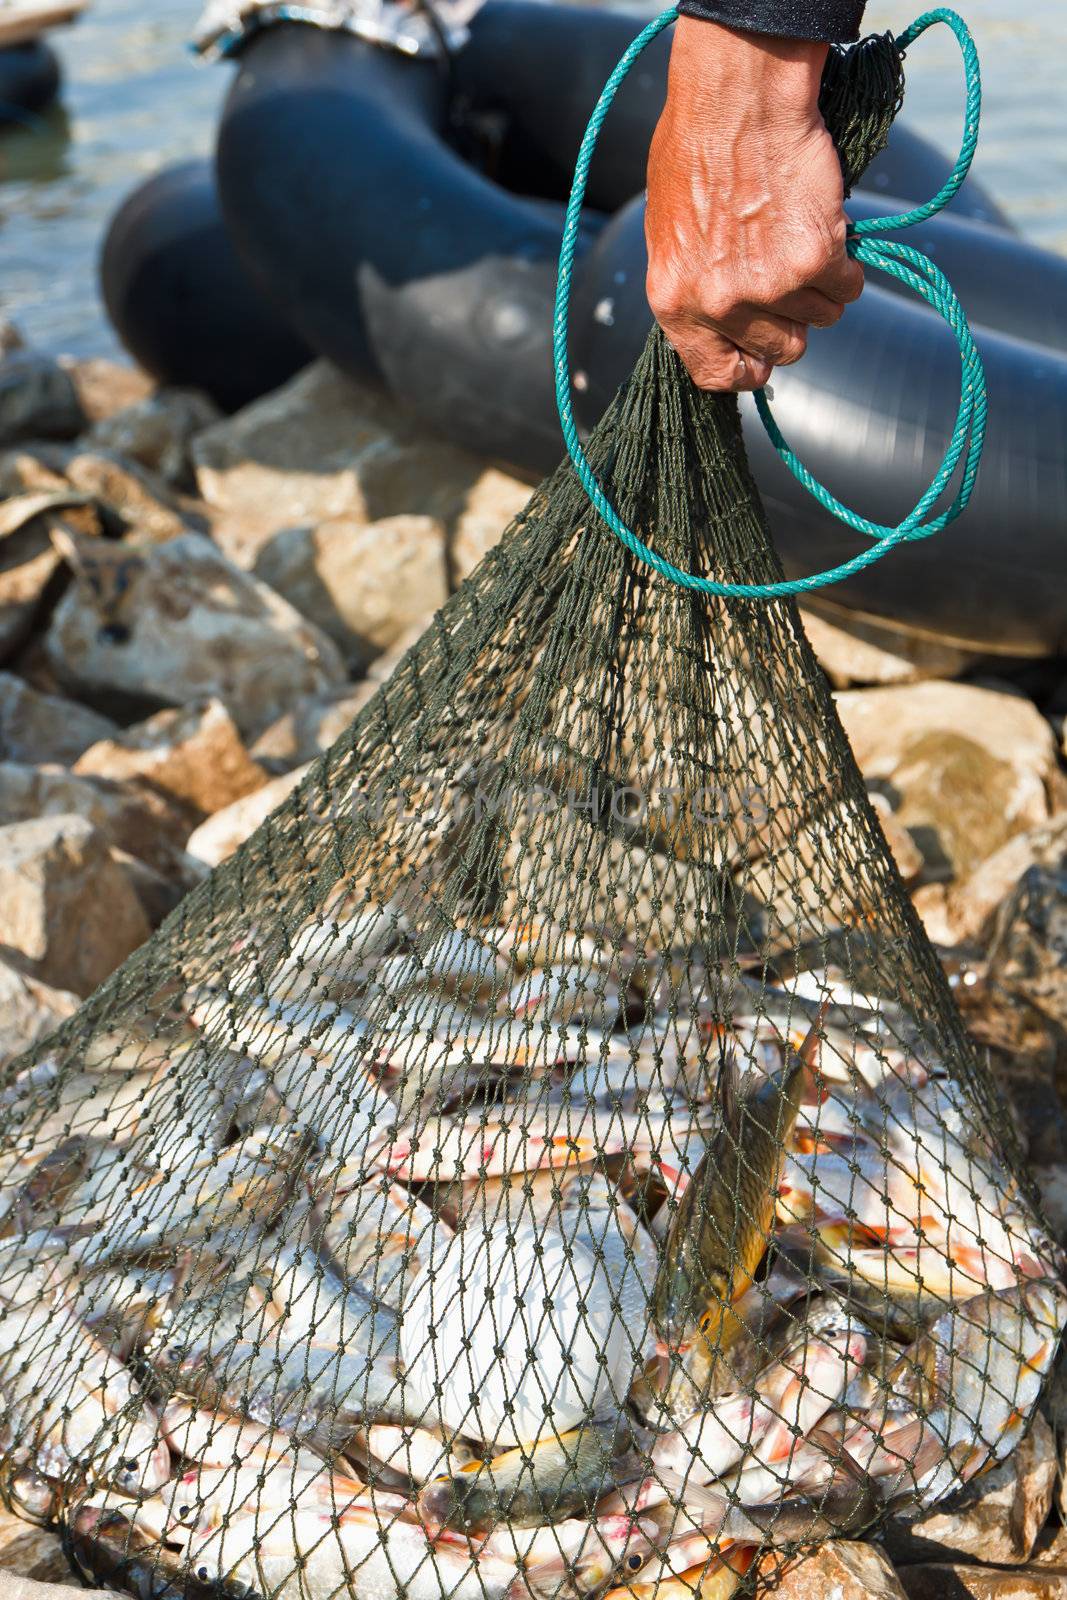 fisherman hold fish in net